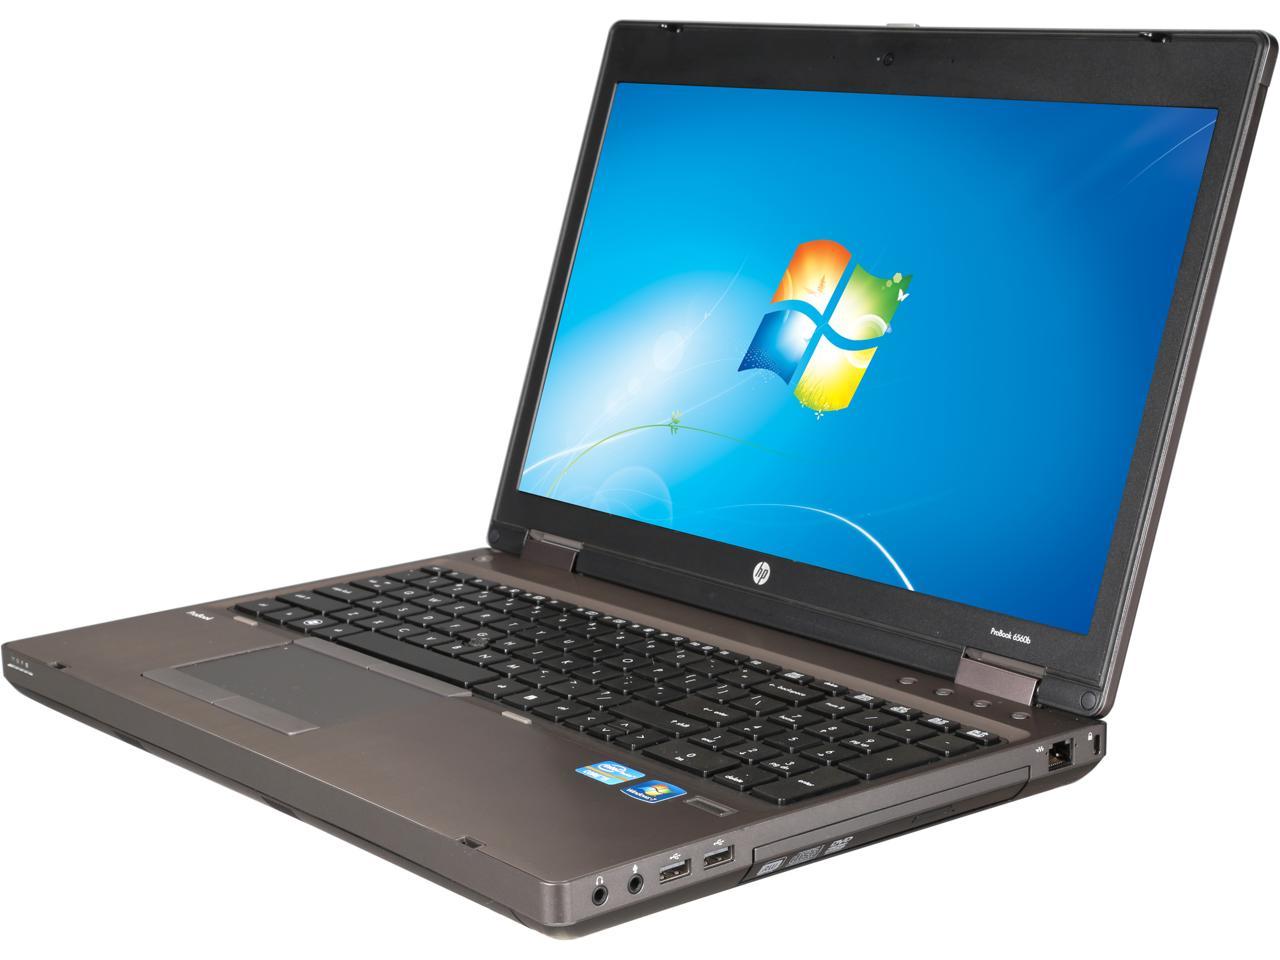 Refurbished Hp Laptop Probook Intel Core I5 2540m 4gb Memory 320gb Hdd Intel Hd Graphics 3000 2763